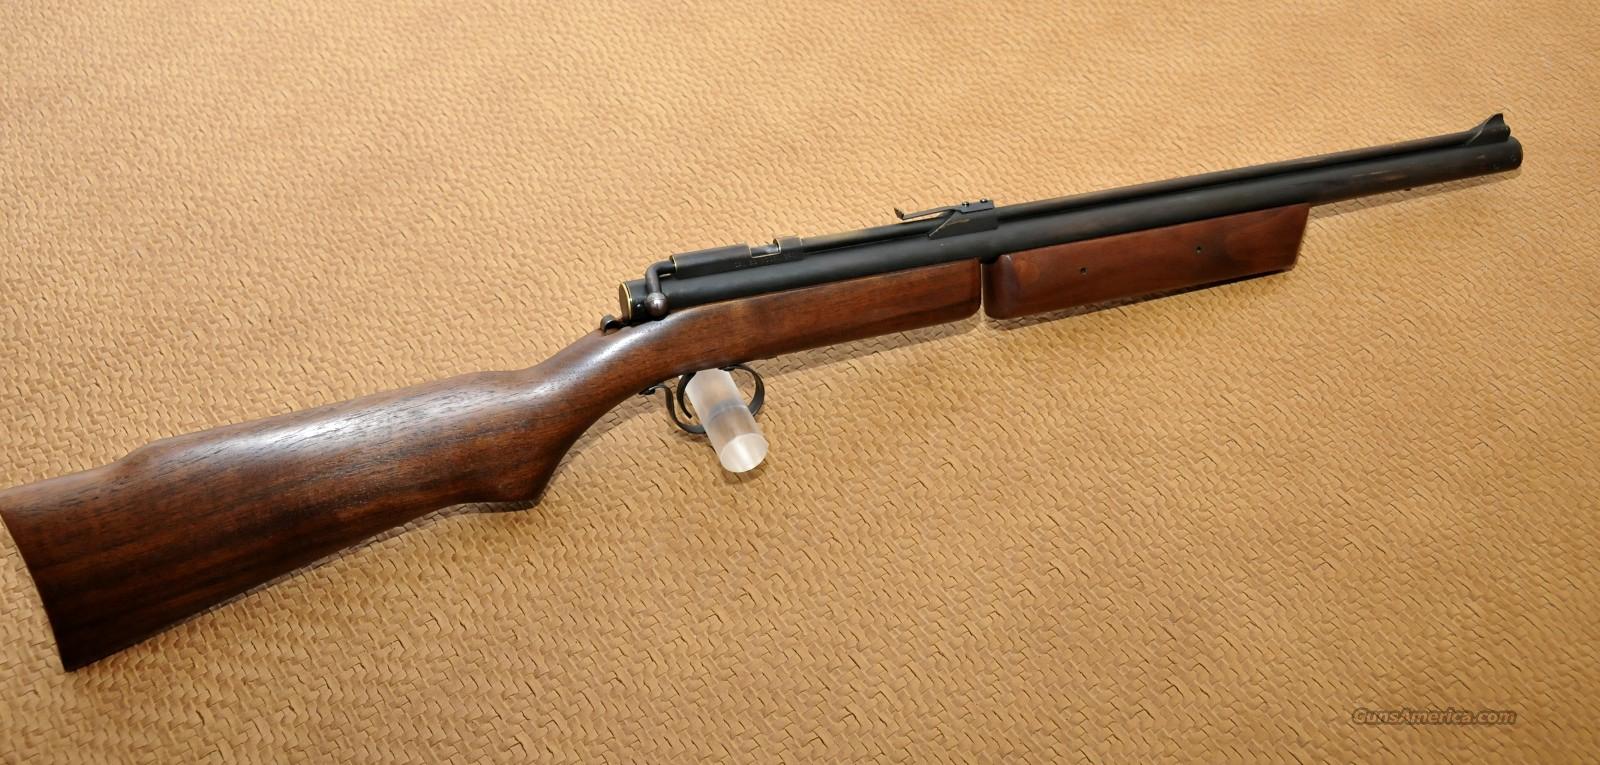 benjamin franklin air rifle model 310 parts